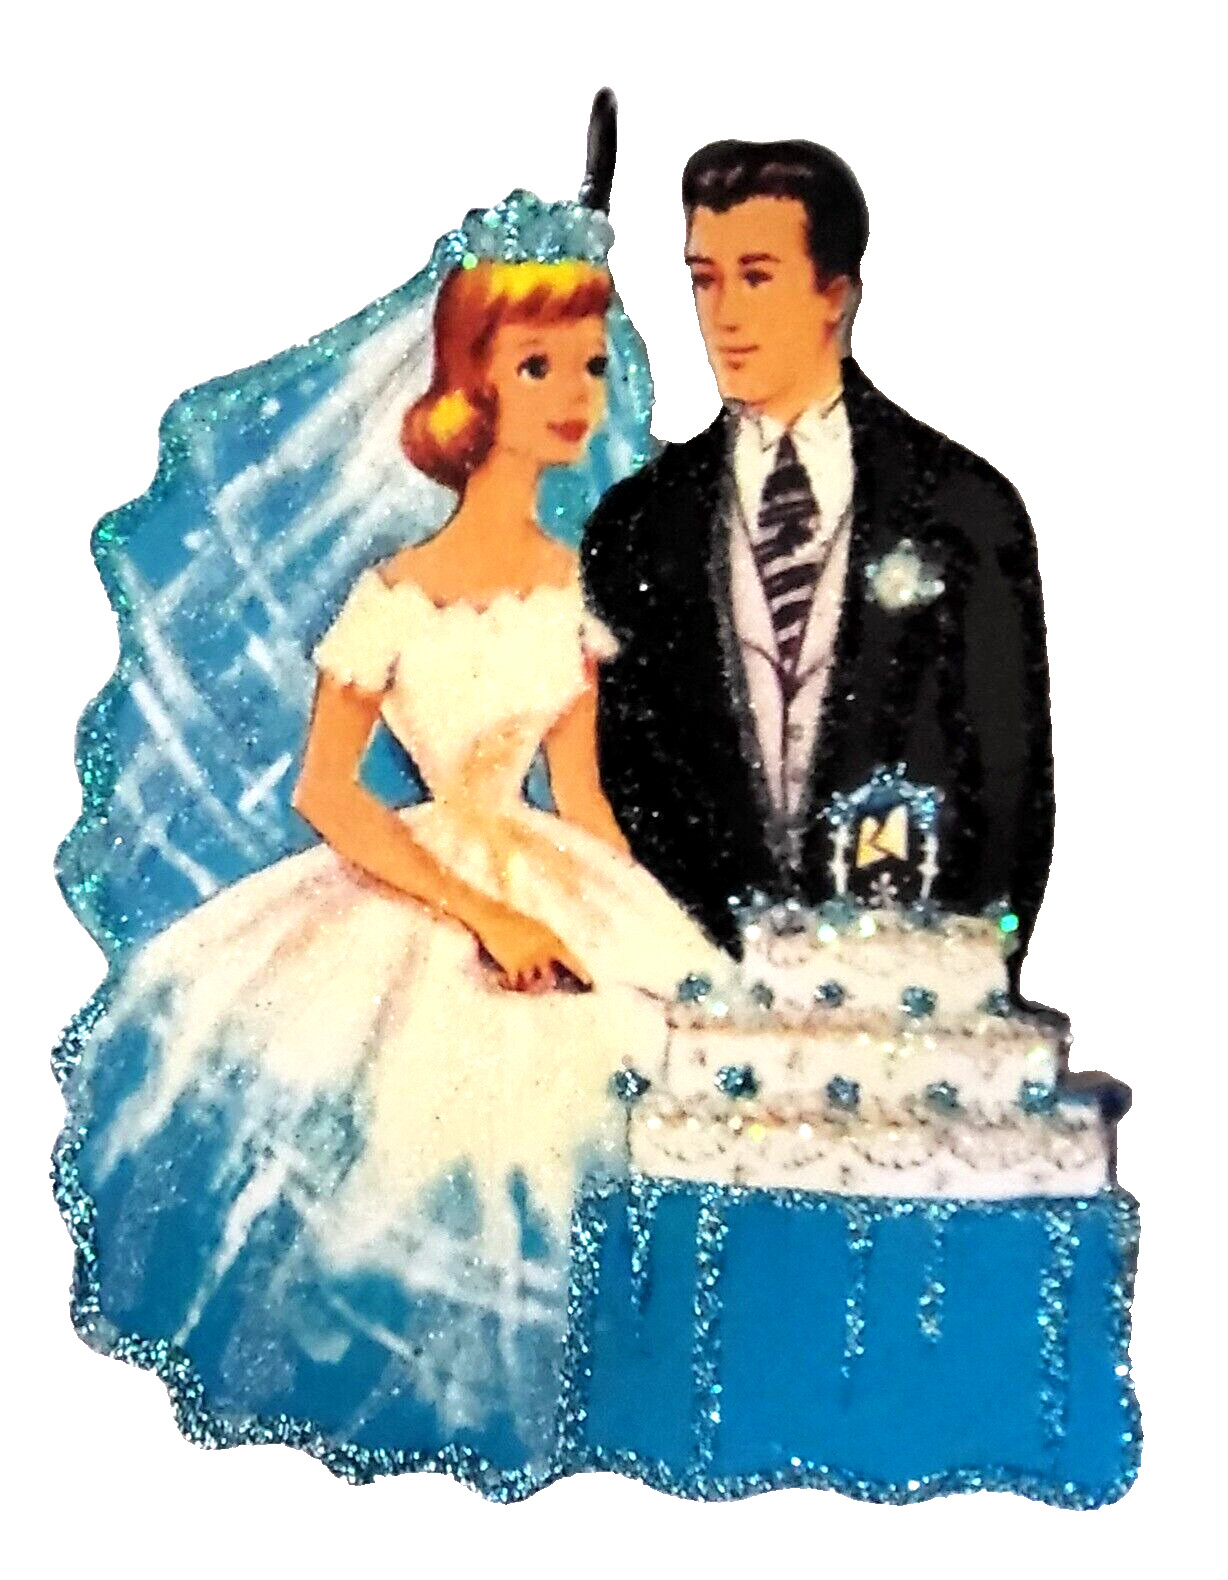 BRIDE & GROOM w/ CAKE,  WEDDING DAY  * Glittered WOOD ORNAMENT  *  VINTAGE IMAGE